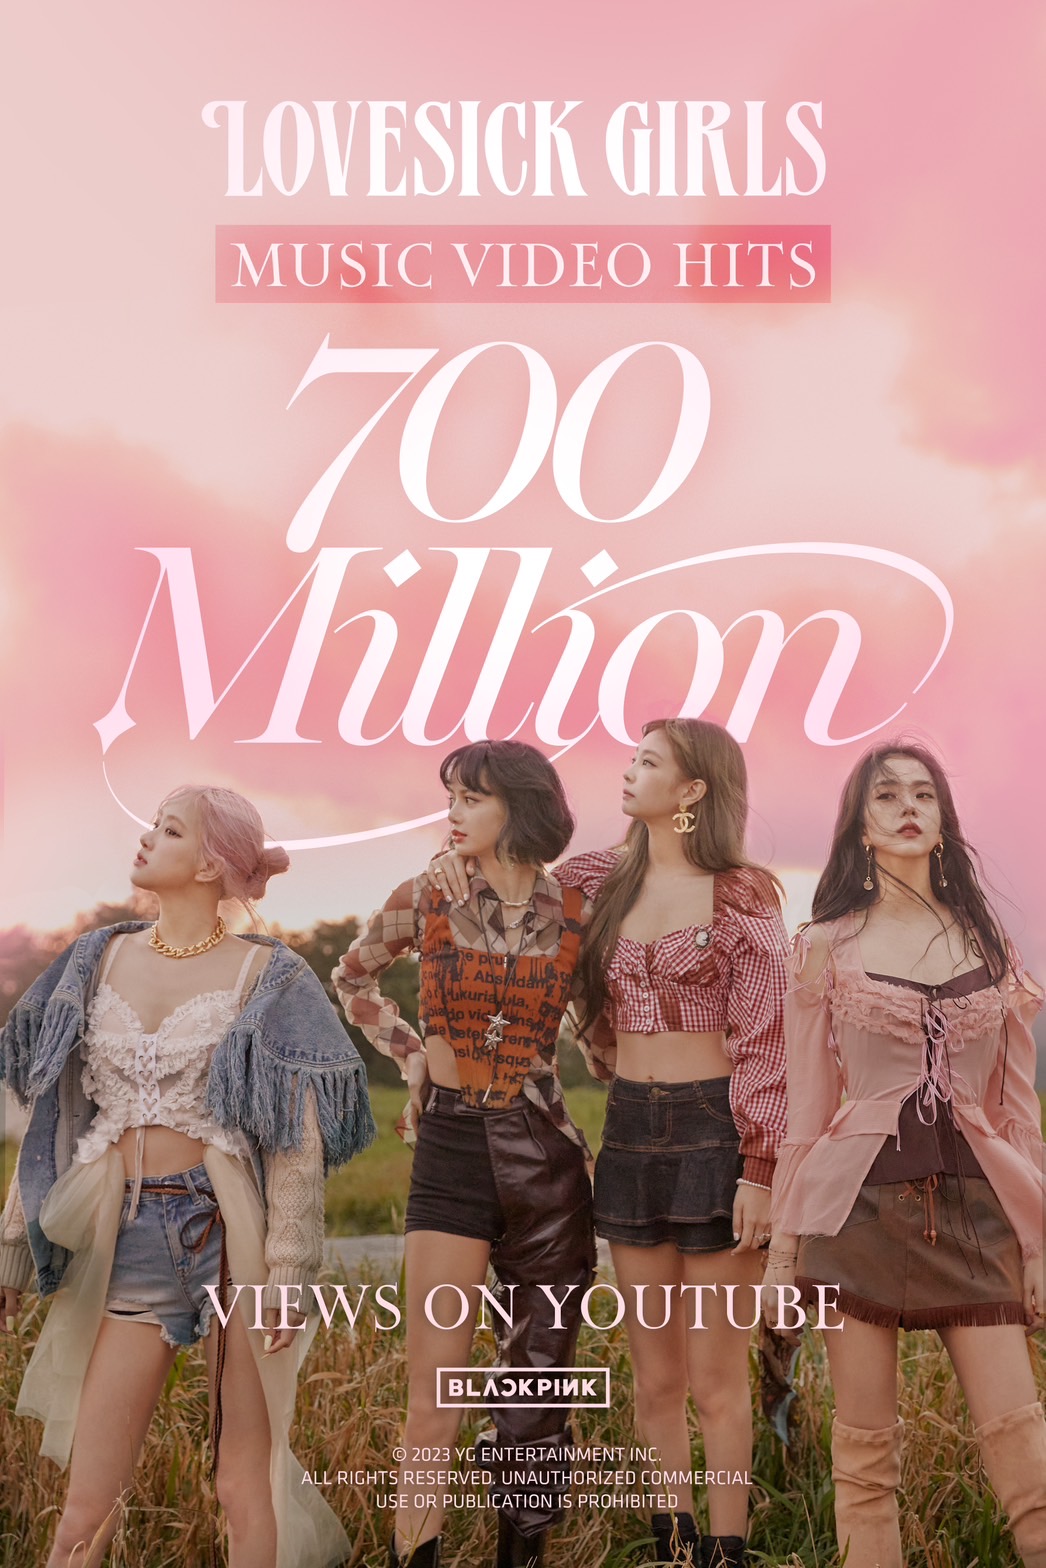 BLACKPINK's 'Lovesick Girls' MV tops 700 mln YouTube views